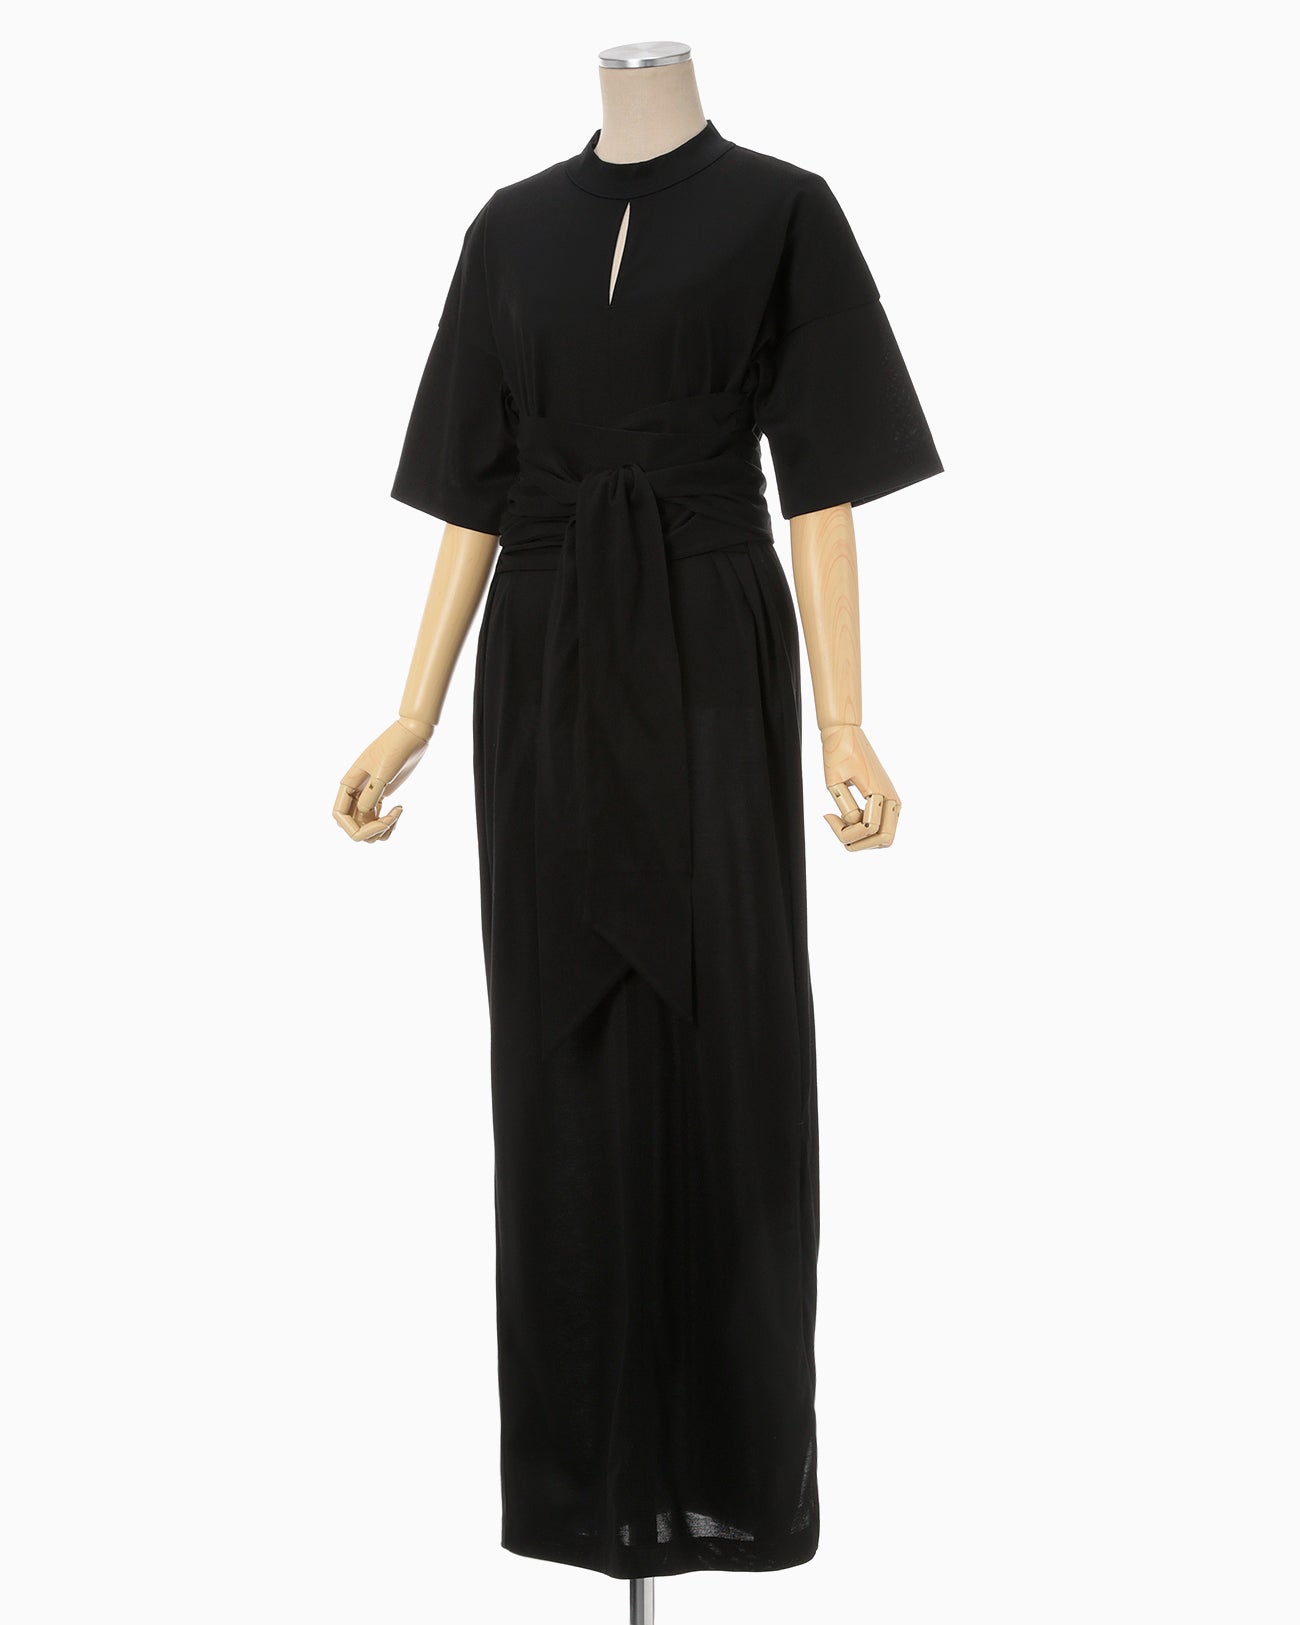 Suvin Cotton Jersey Dress - black